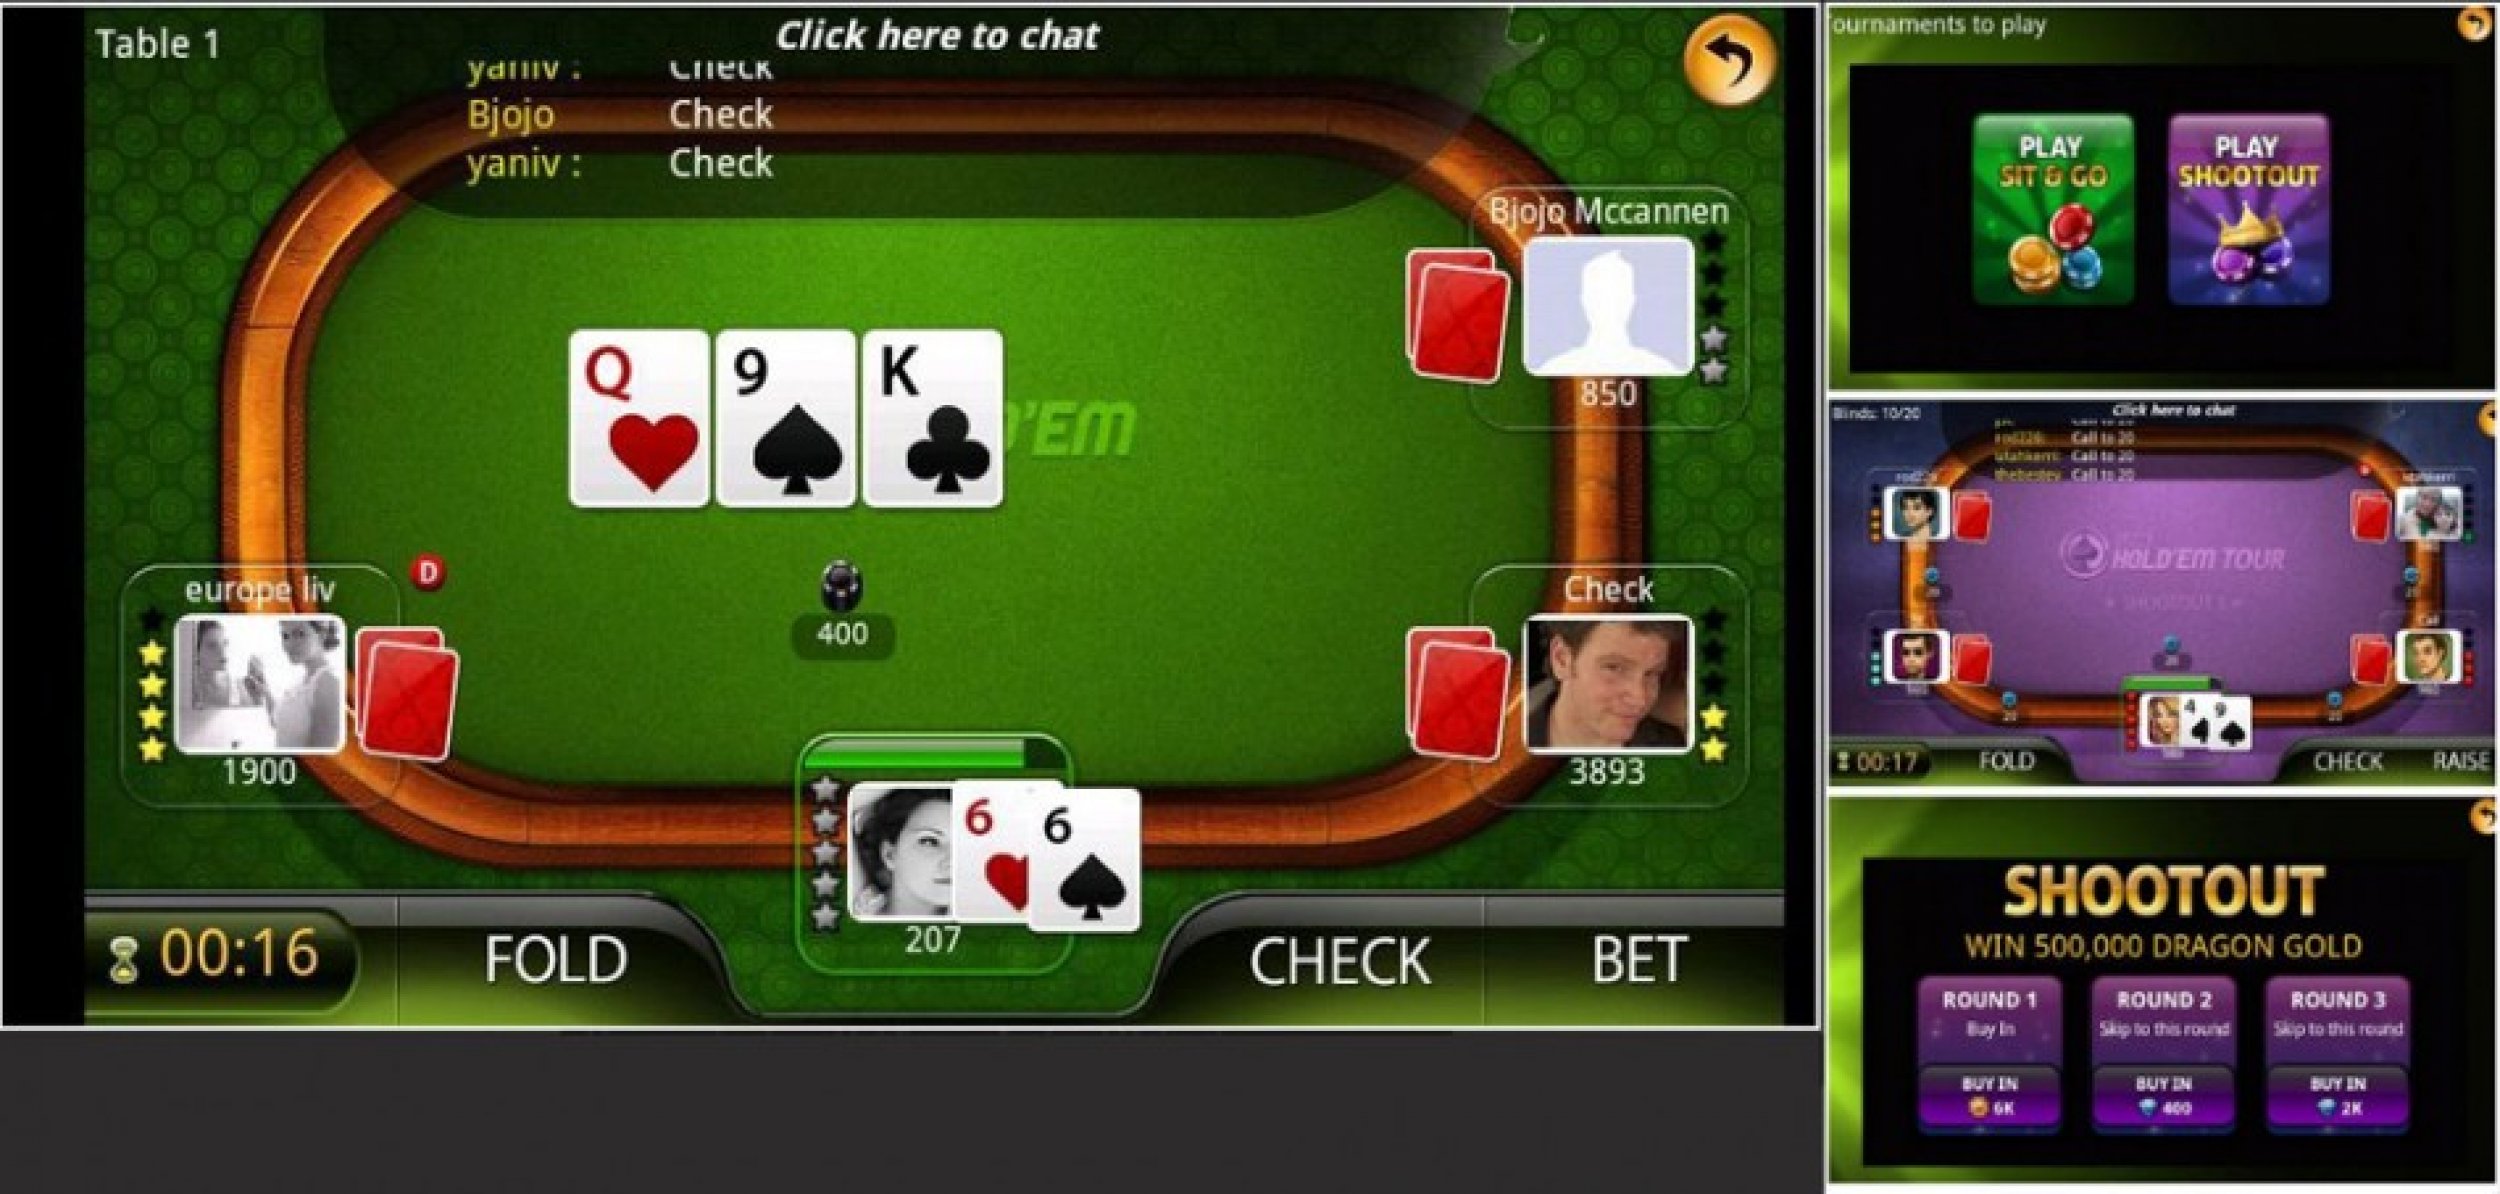 5. Live Holdem Poker Pro